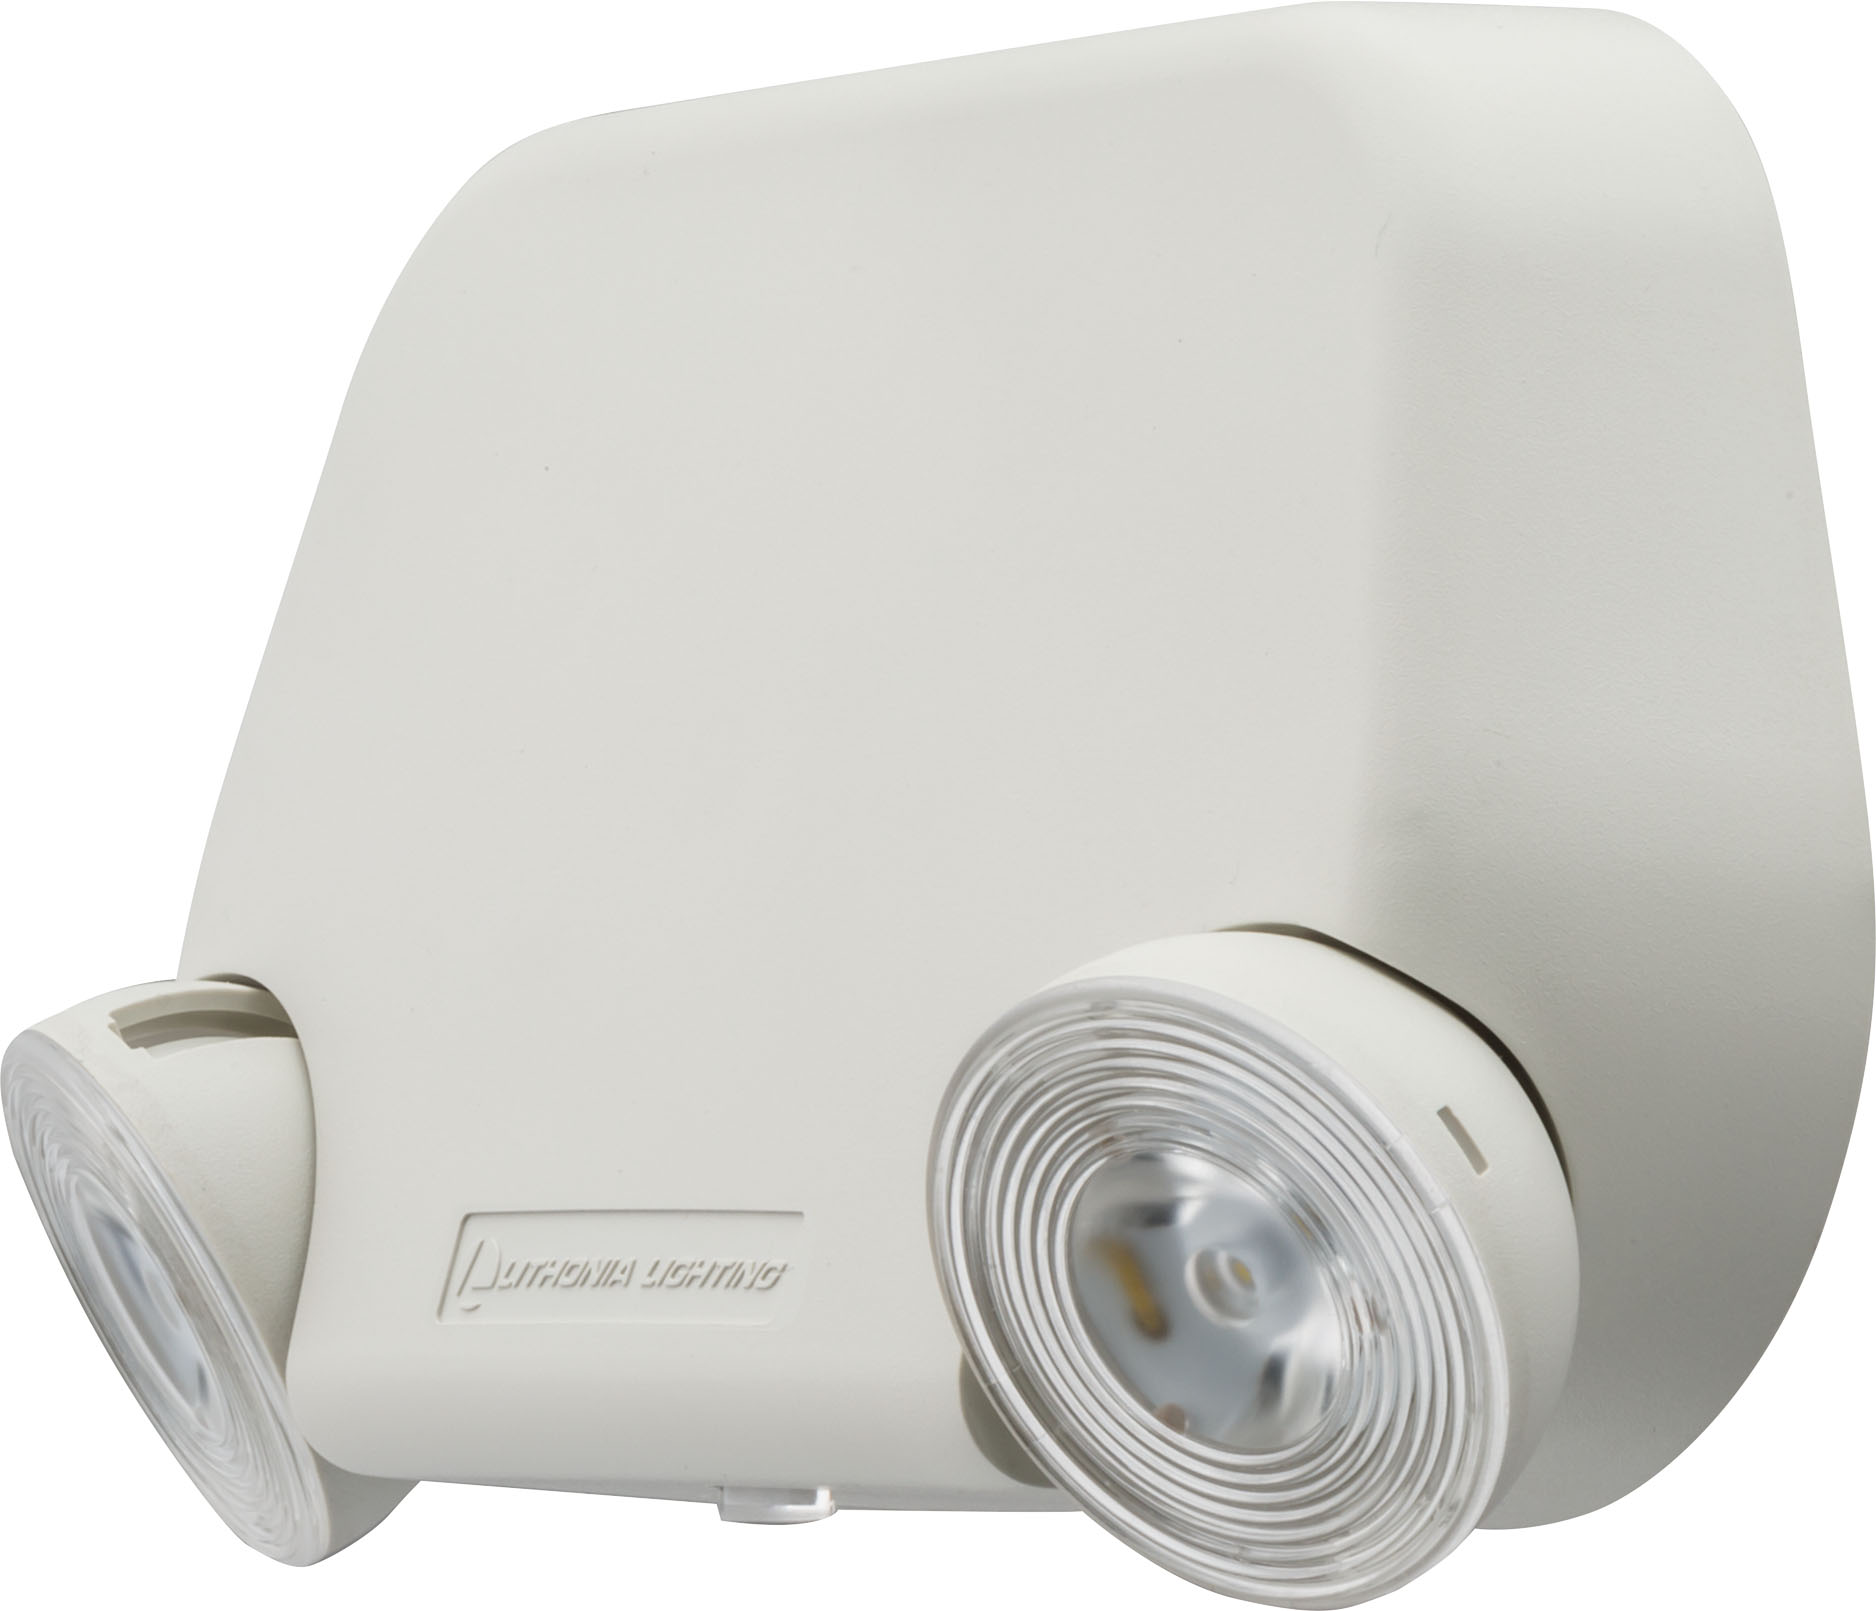 EU2LM12 - Led Emergency Light Low Profile White - Lithonia Lighting